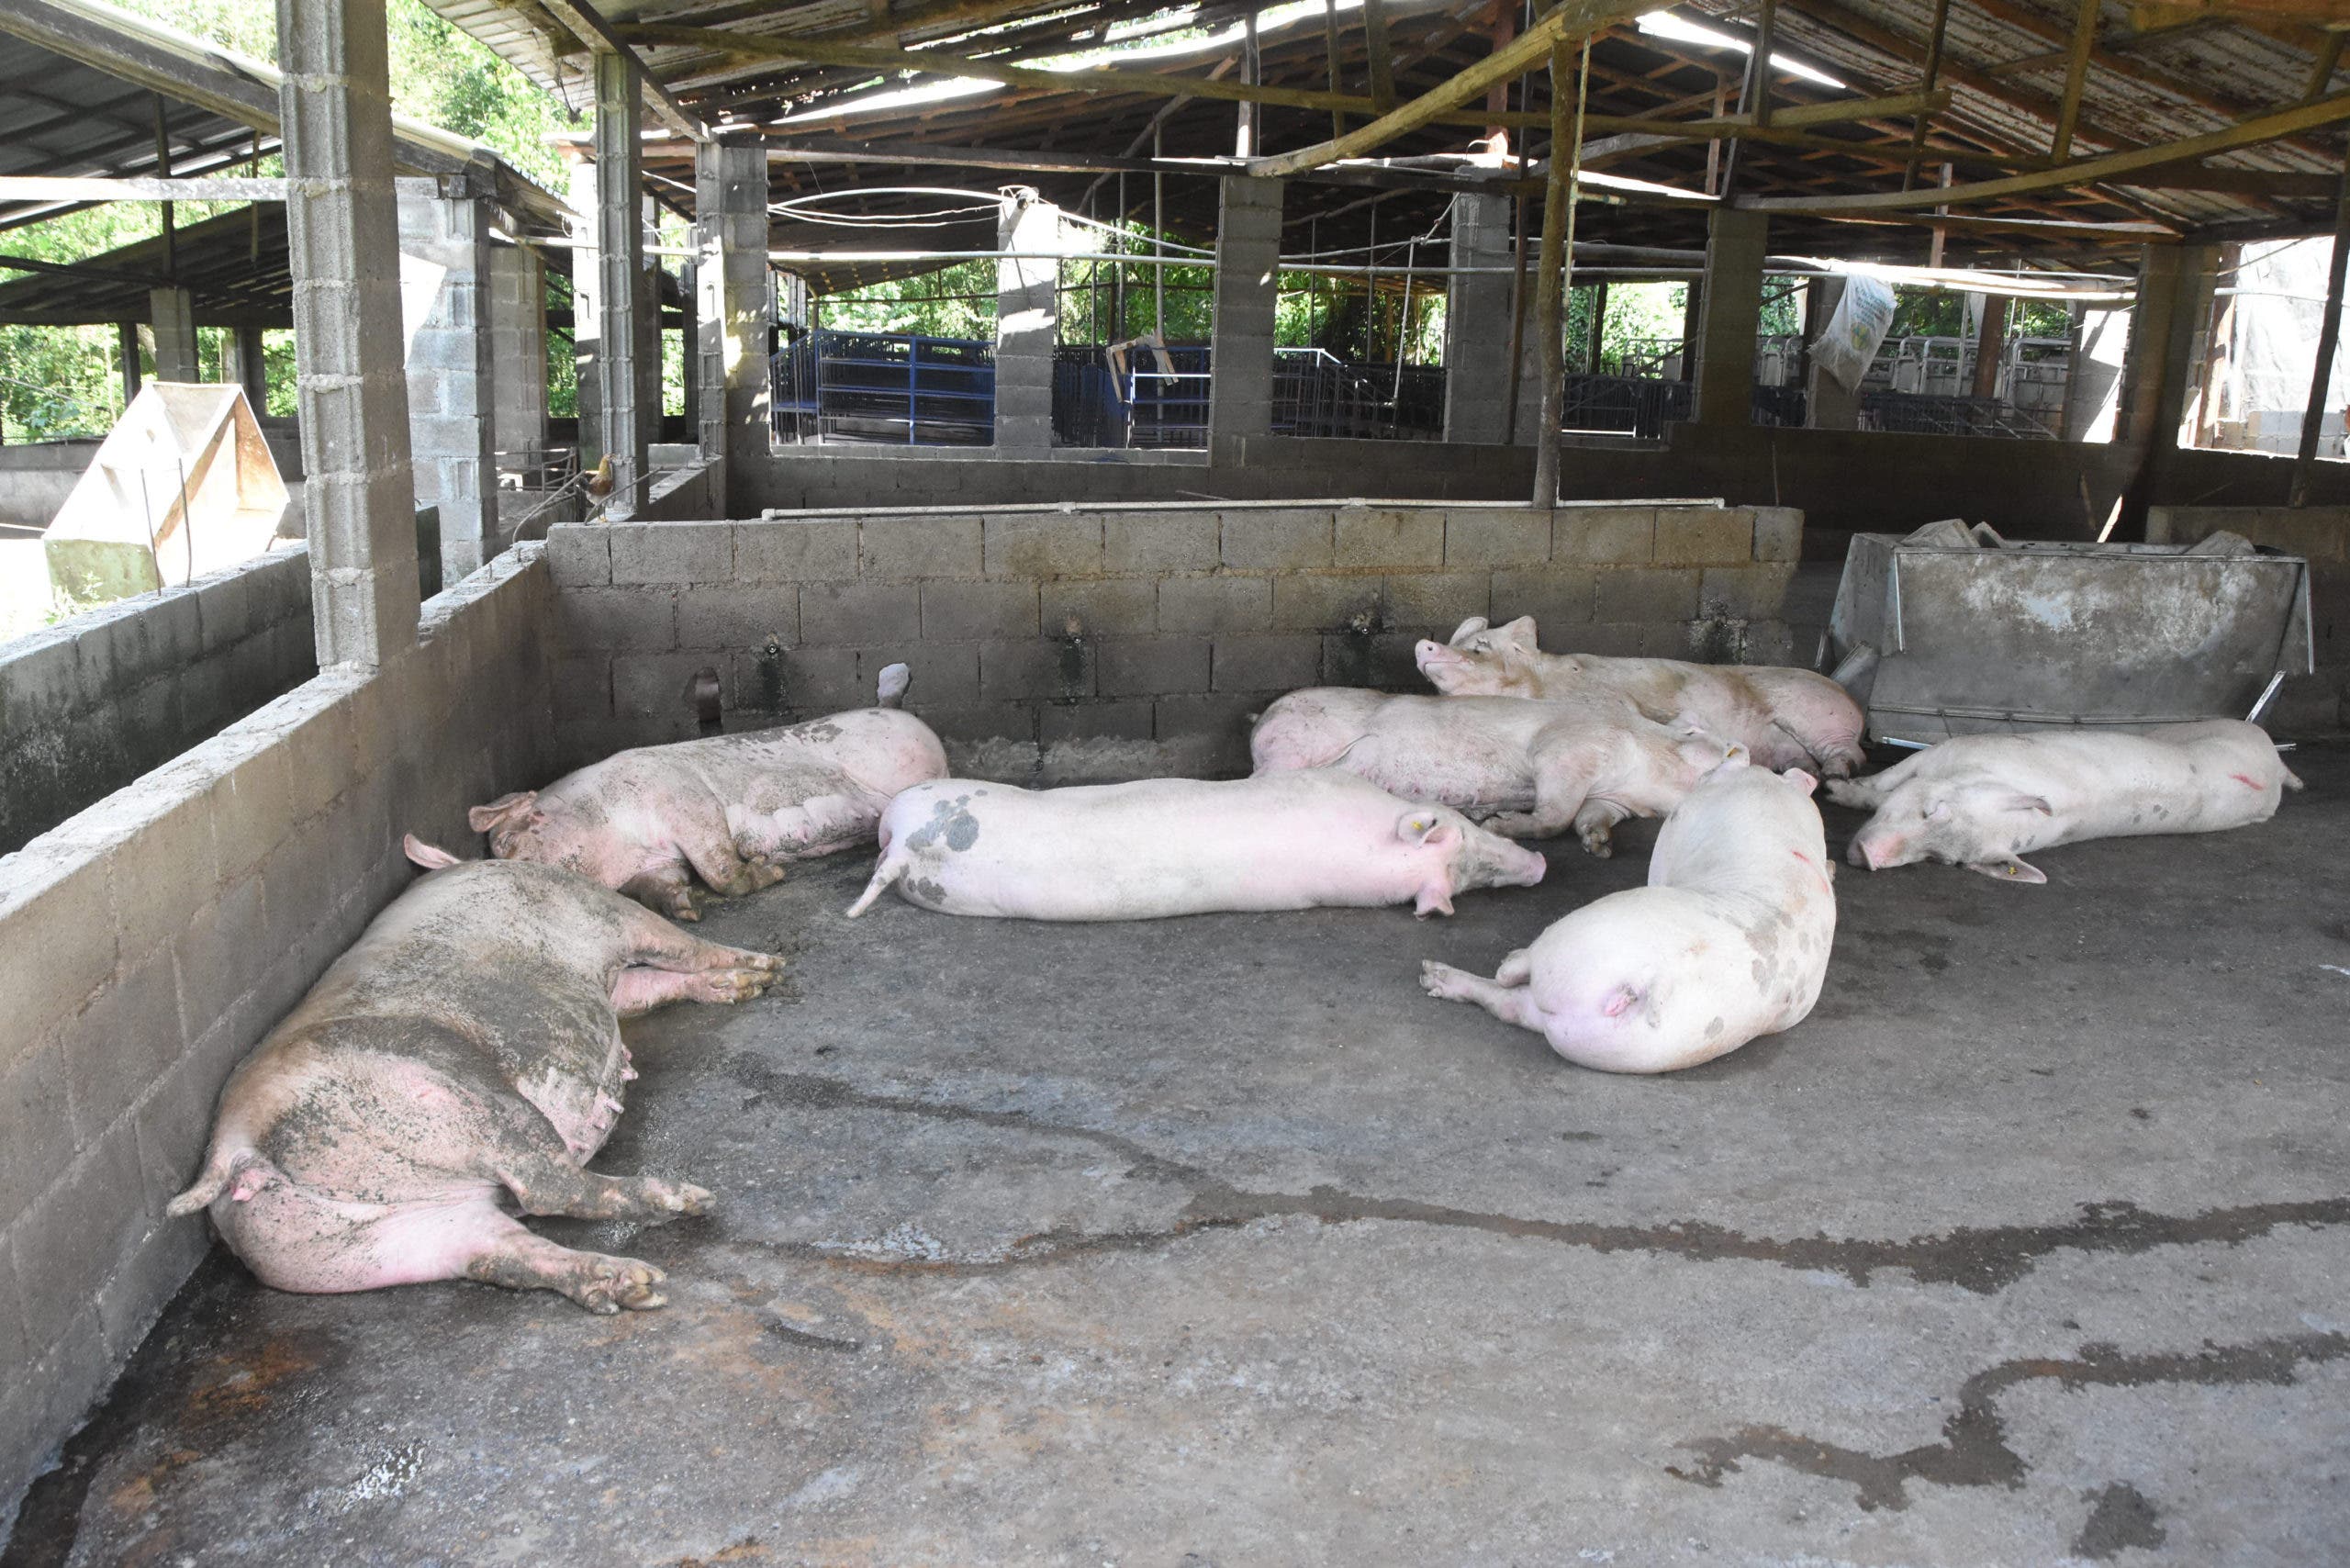 Fiebre porcina deja en quiebra a productores